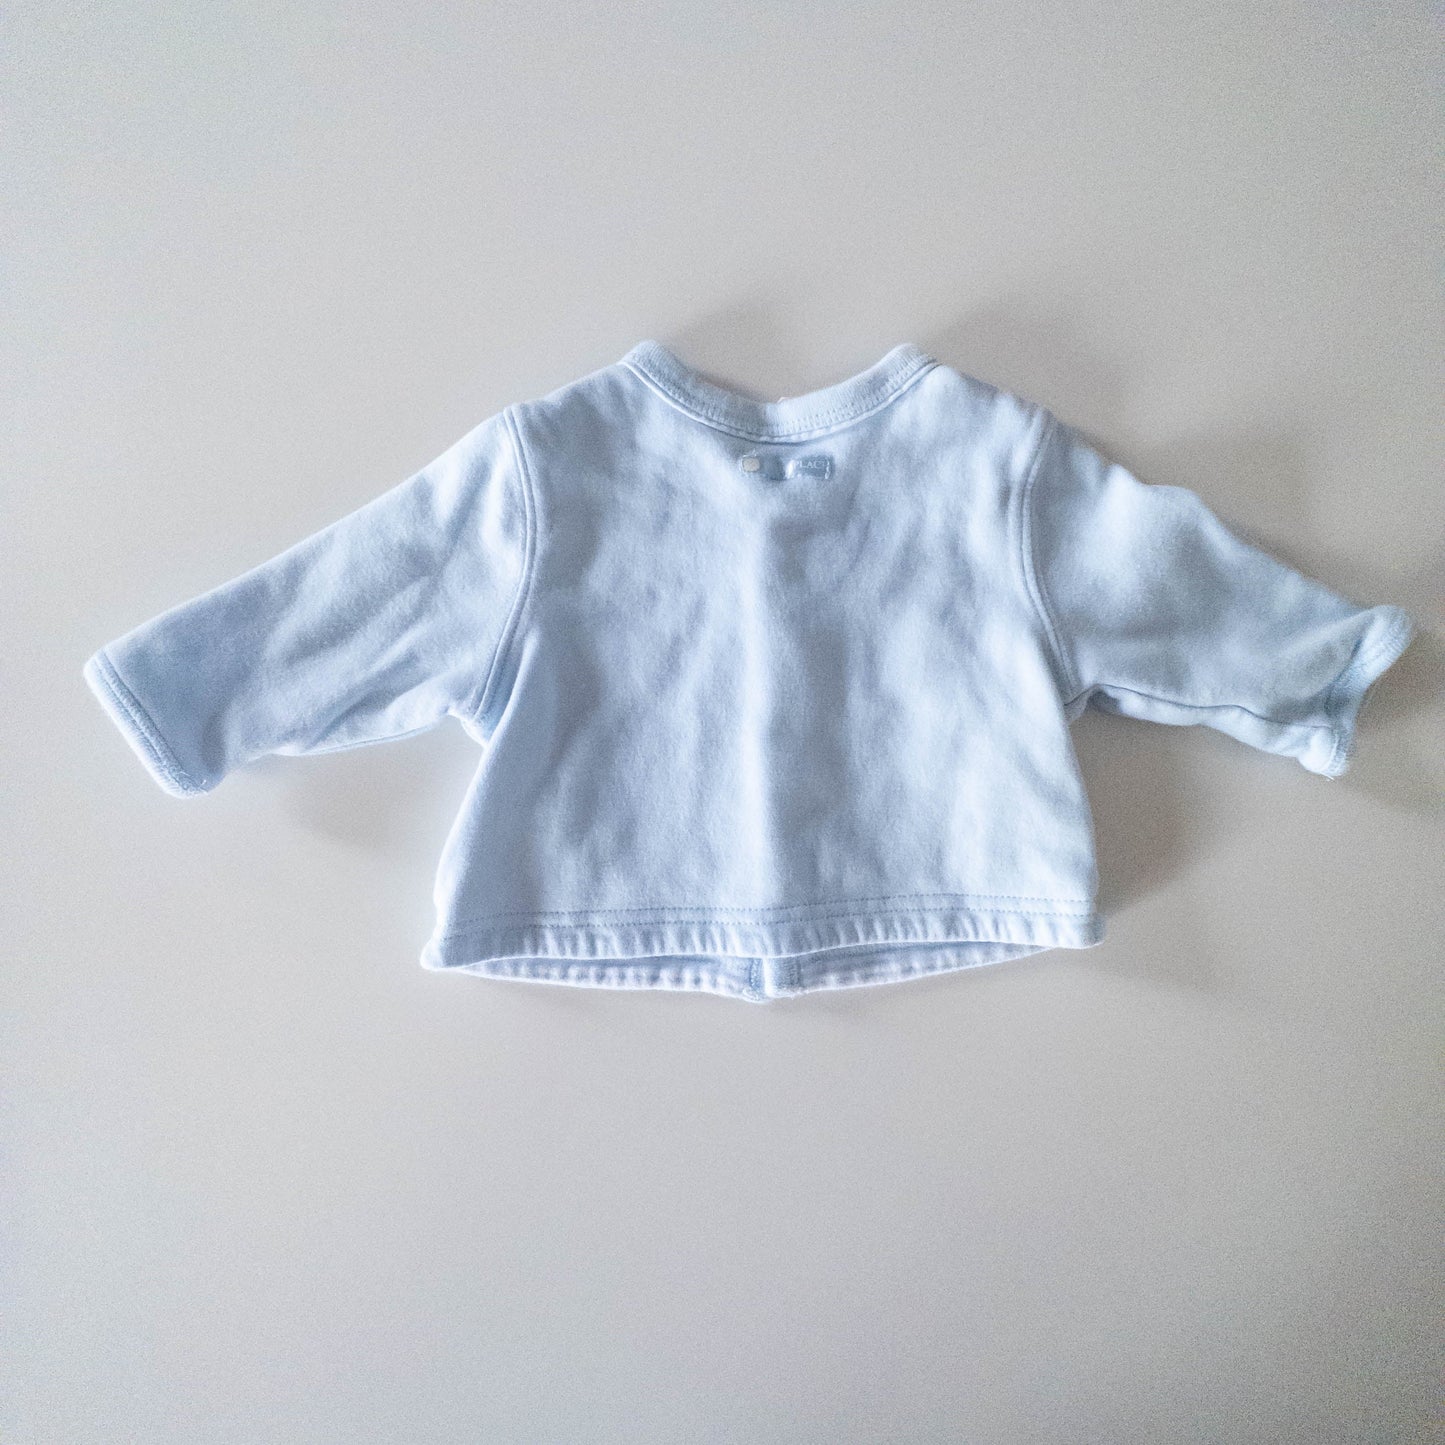 Children's place - Sweater - 0-3 months